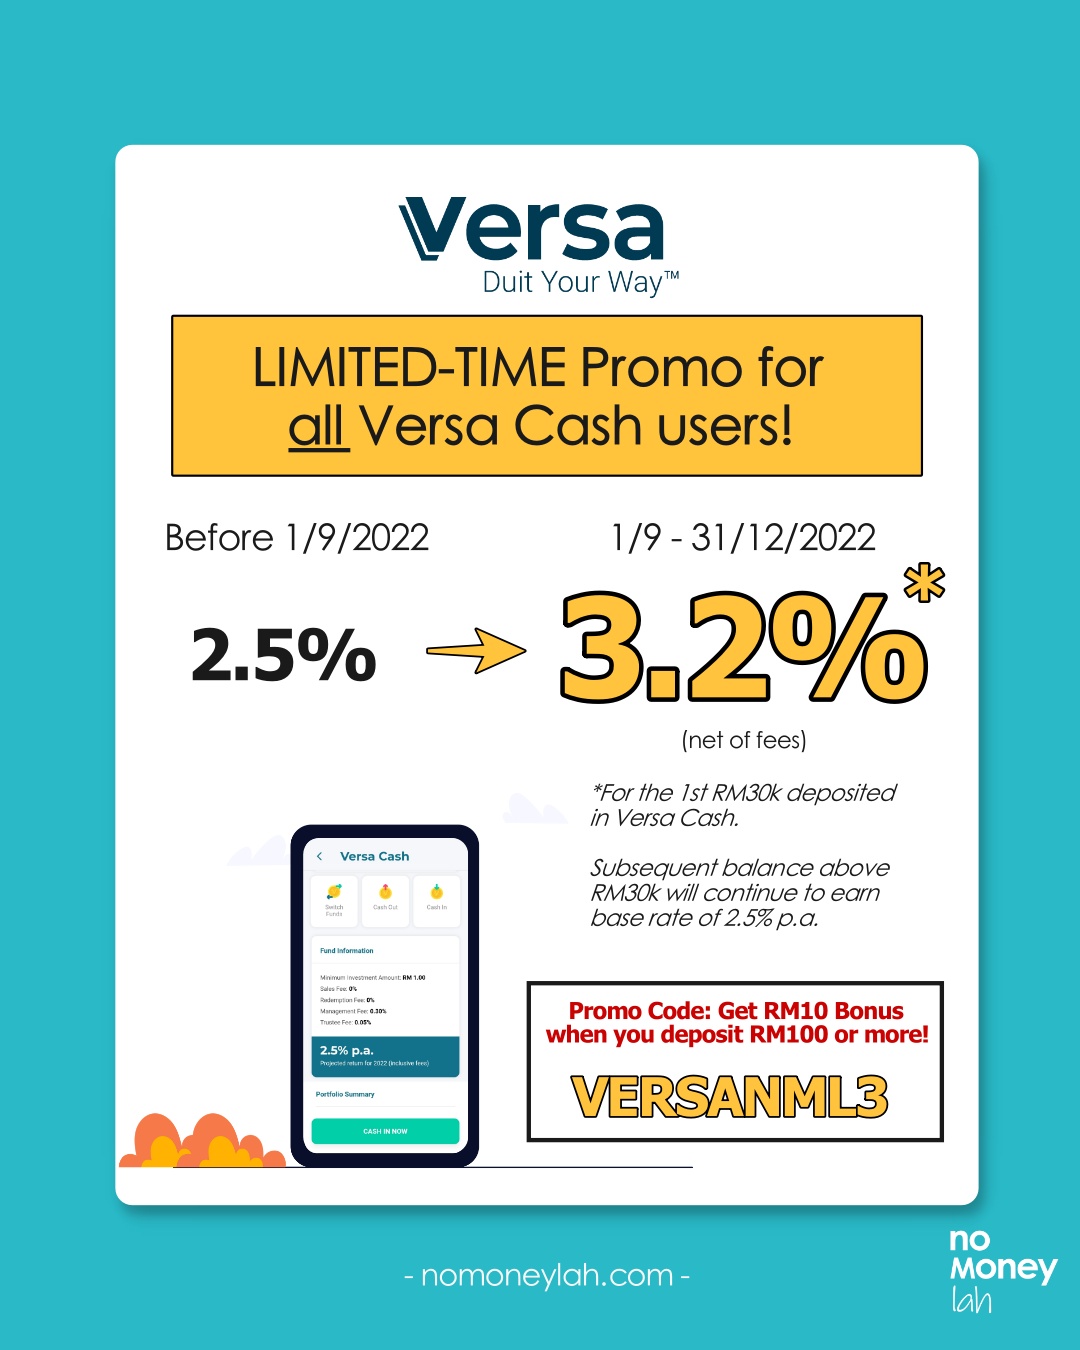 Versa Cash 3.2% promo rate